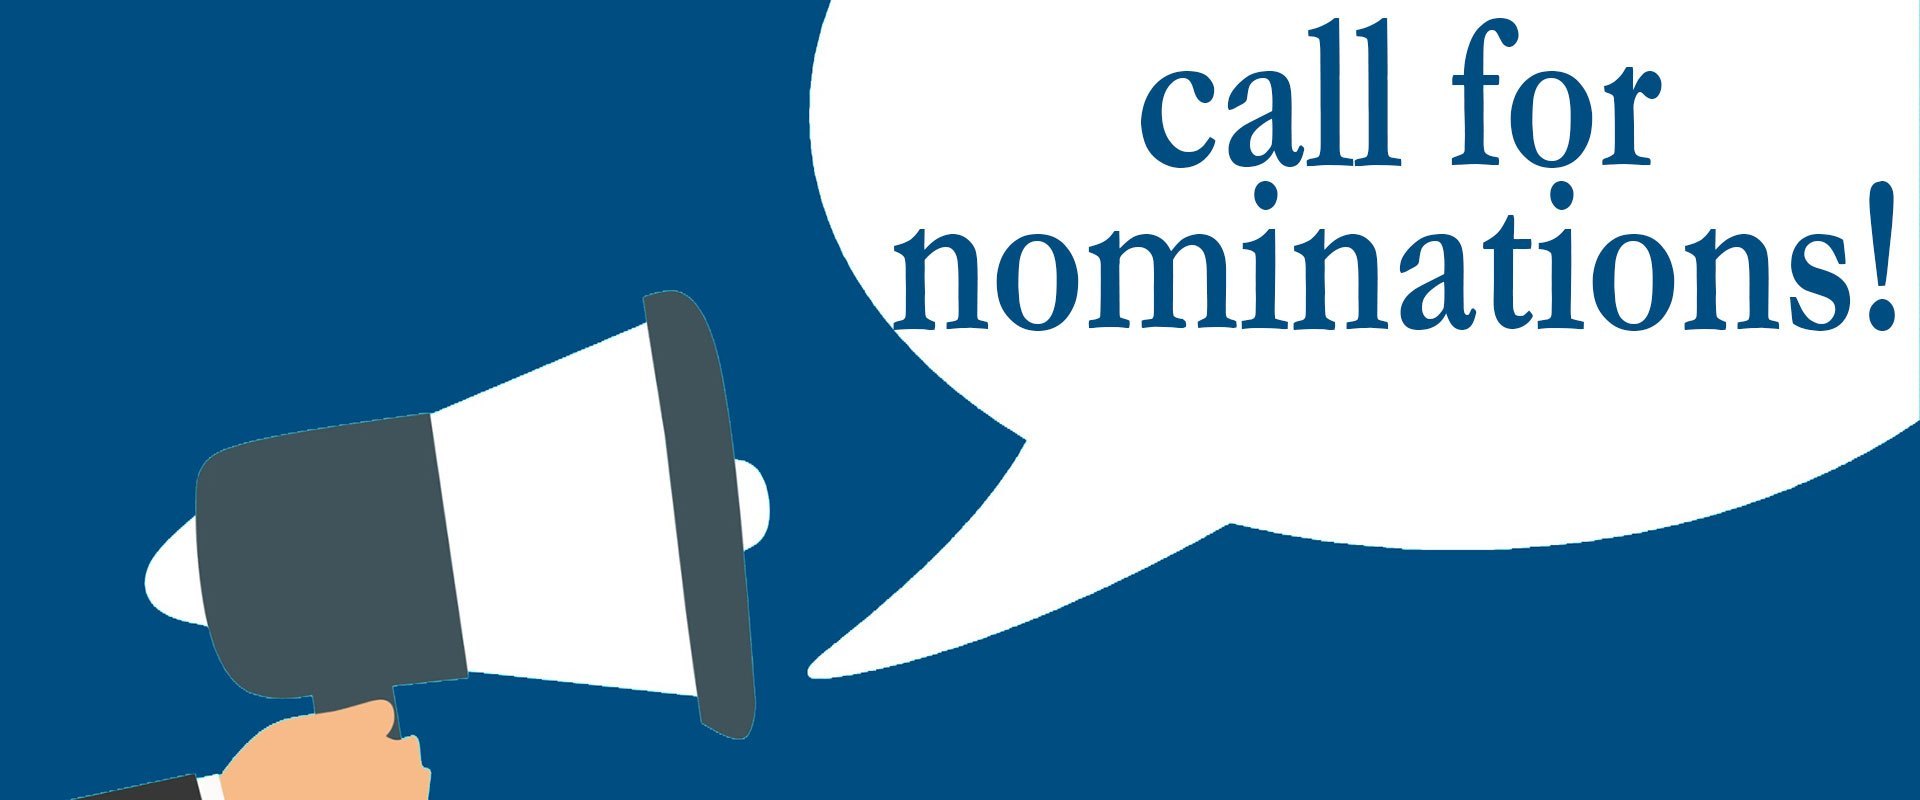 nominations megaphone 3272935